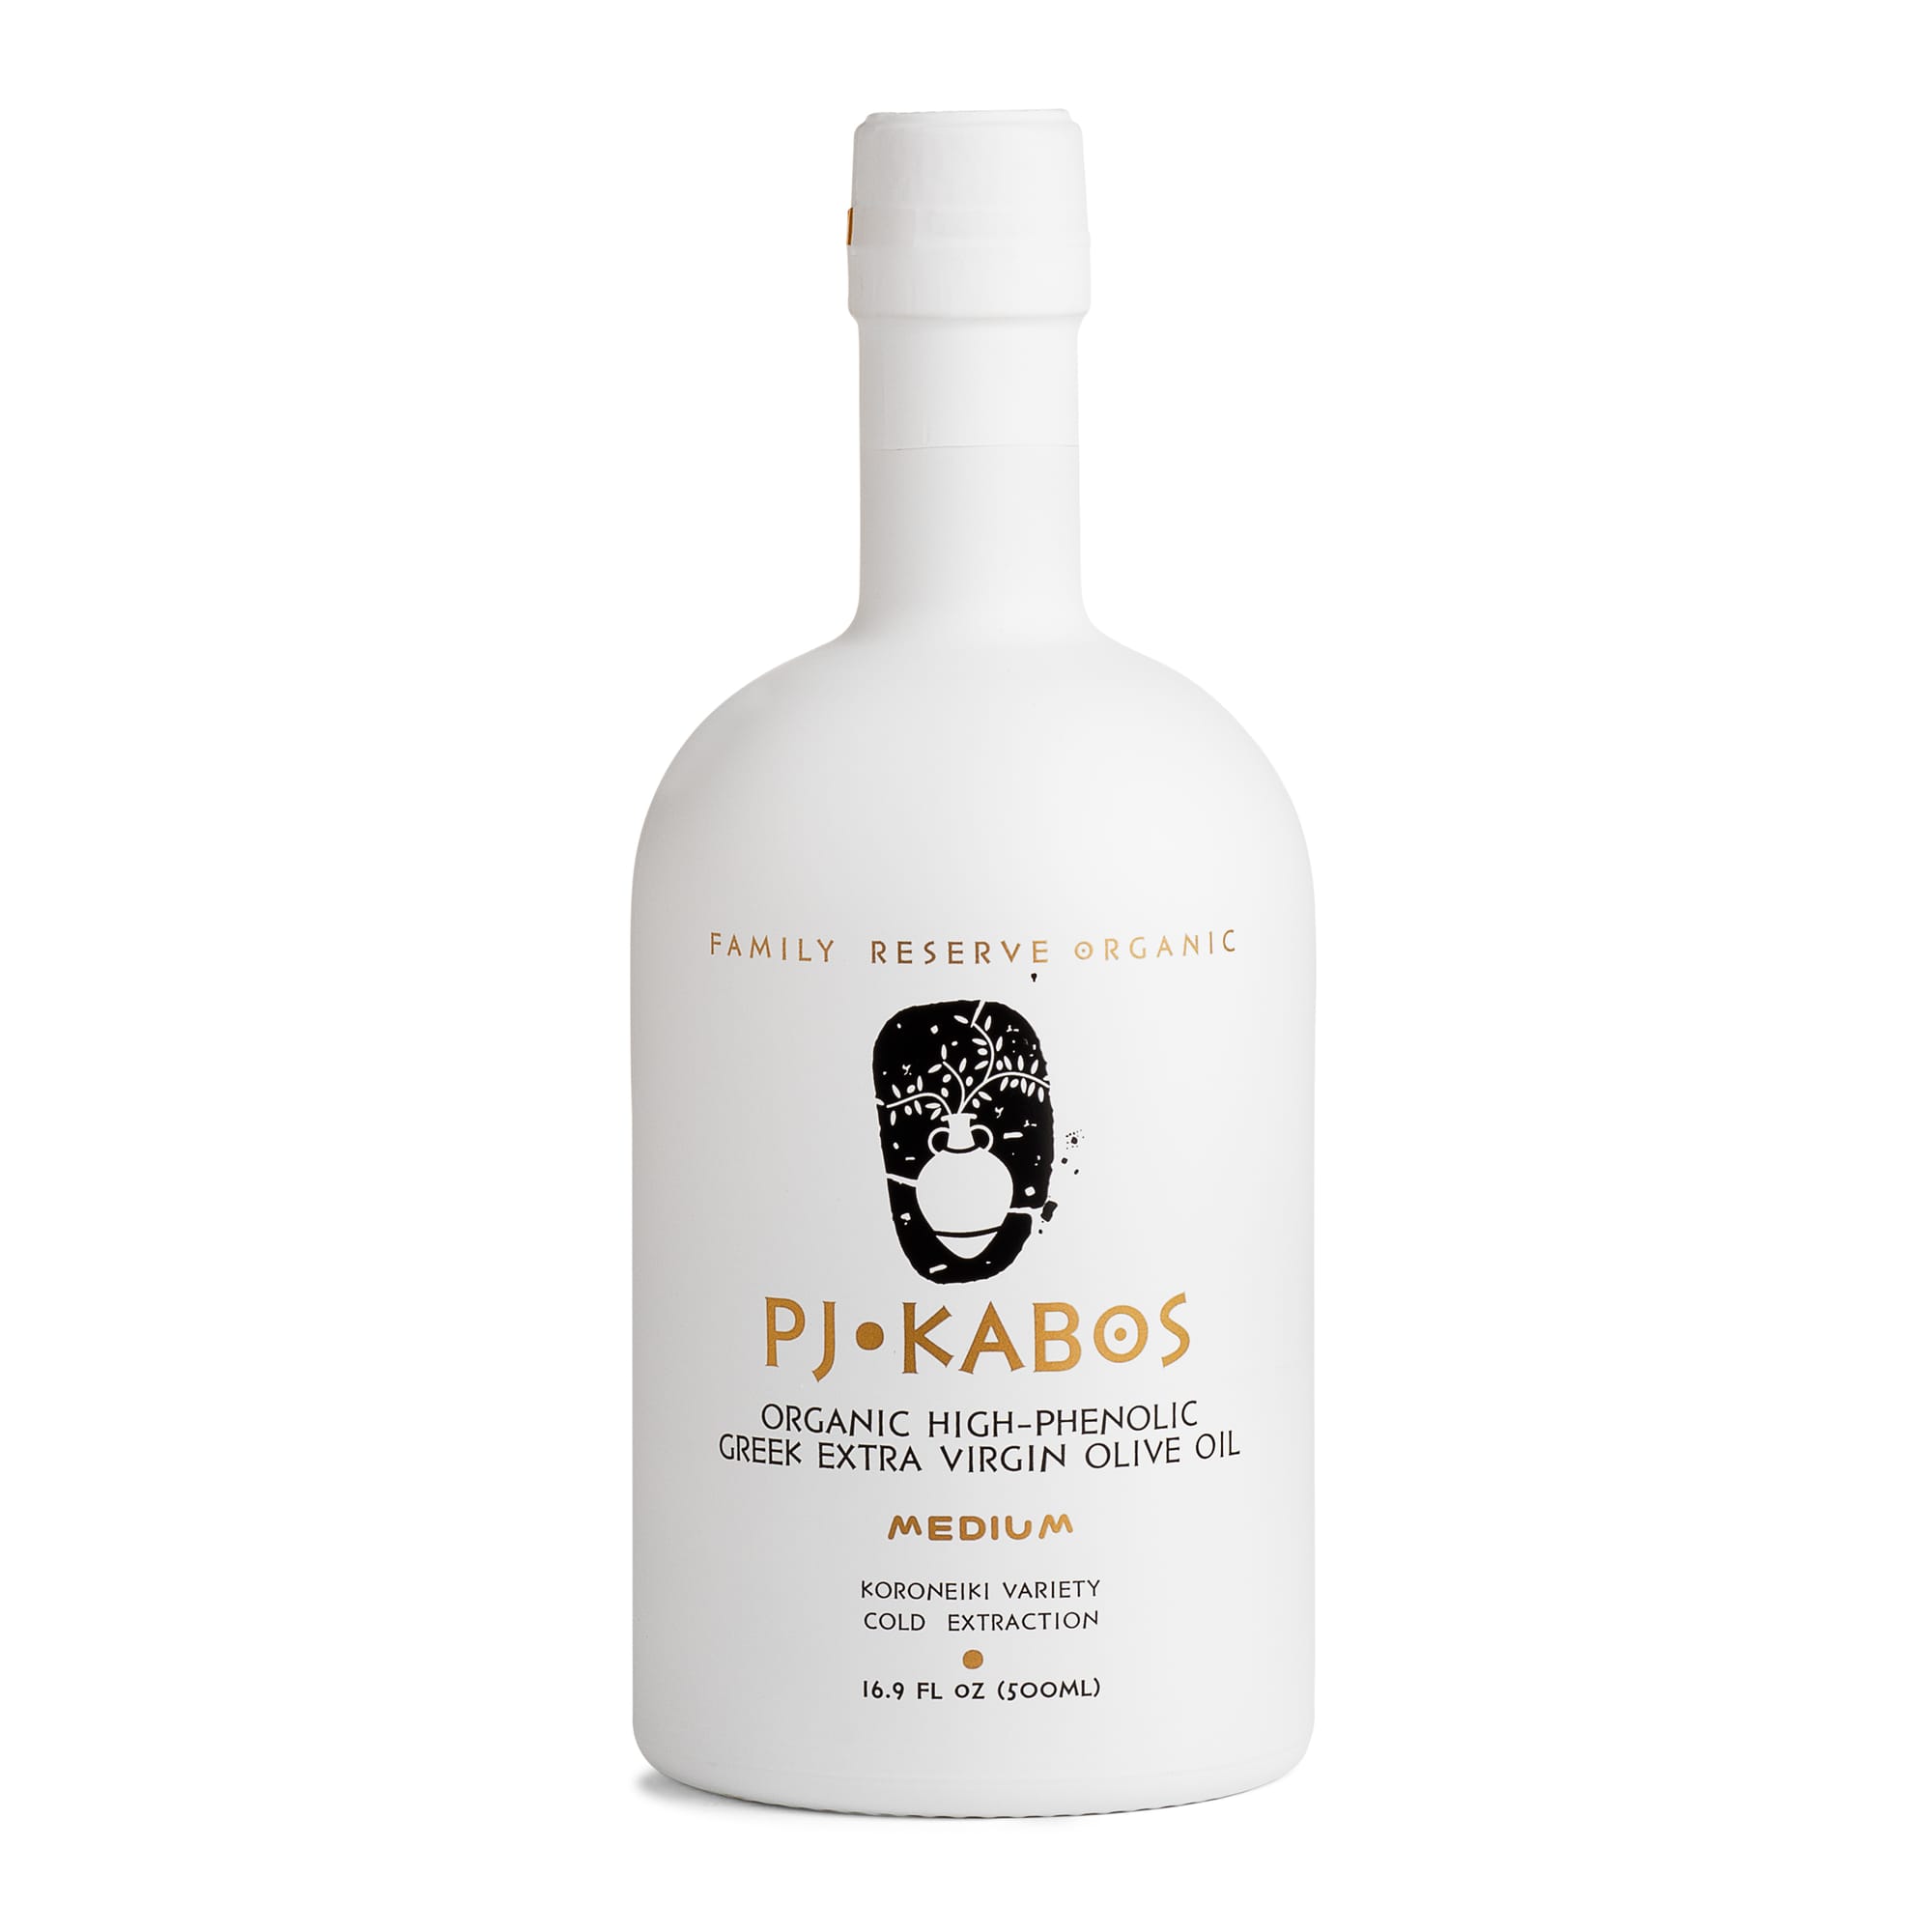 A bottle of PJ KABOS High-Phenolic Extra Virgin Organic Olive Oil, Medium taste intensity (white bottle) is shown. It is a glamour shot.